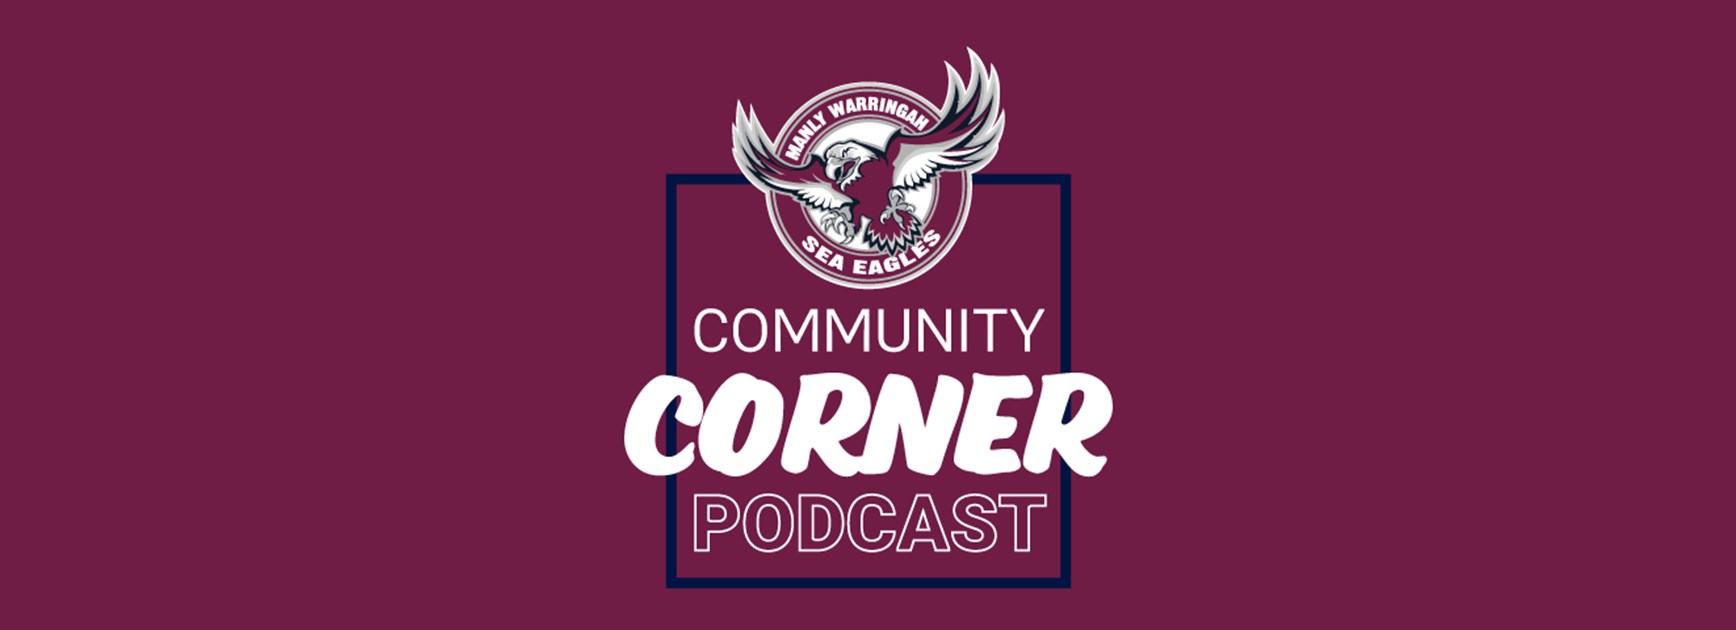 Community Episode 6: John Bonasera (Part 2)